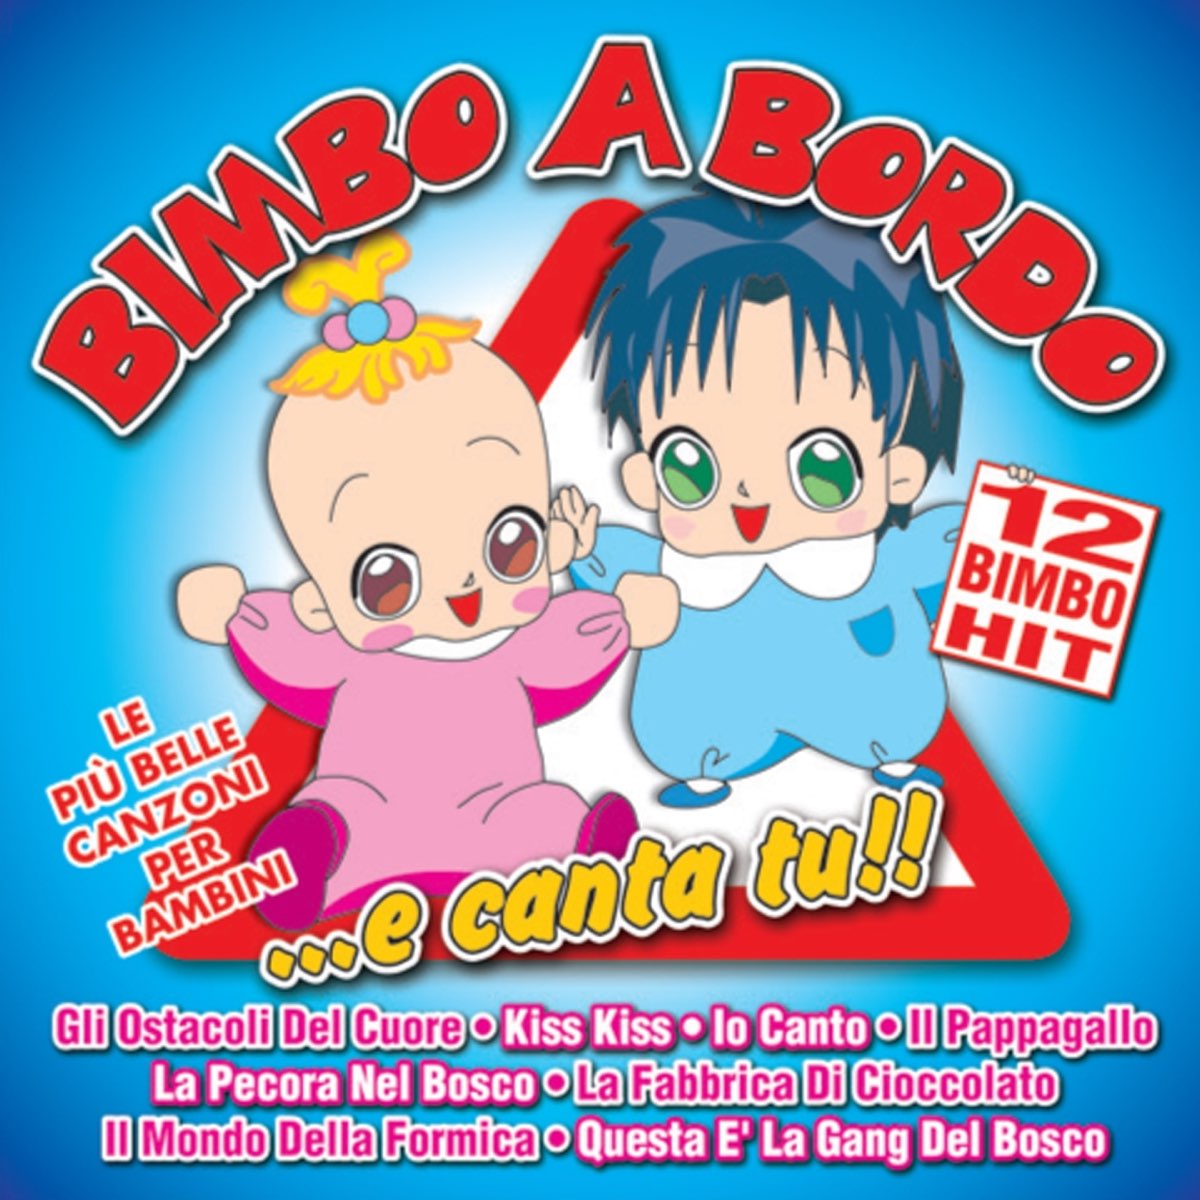 Bimbo a bordoE canta tu!! - Album by Baby Land - Apple Music